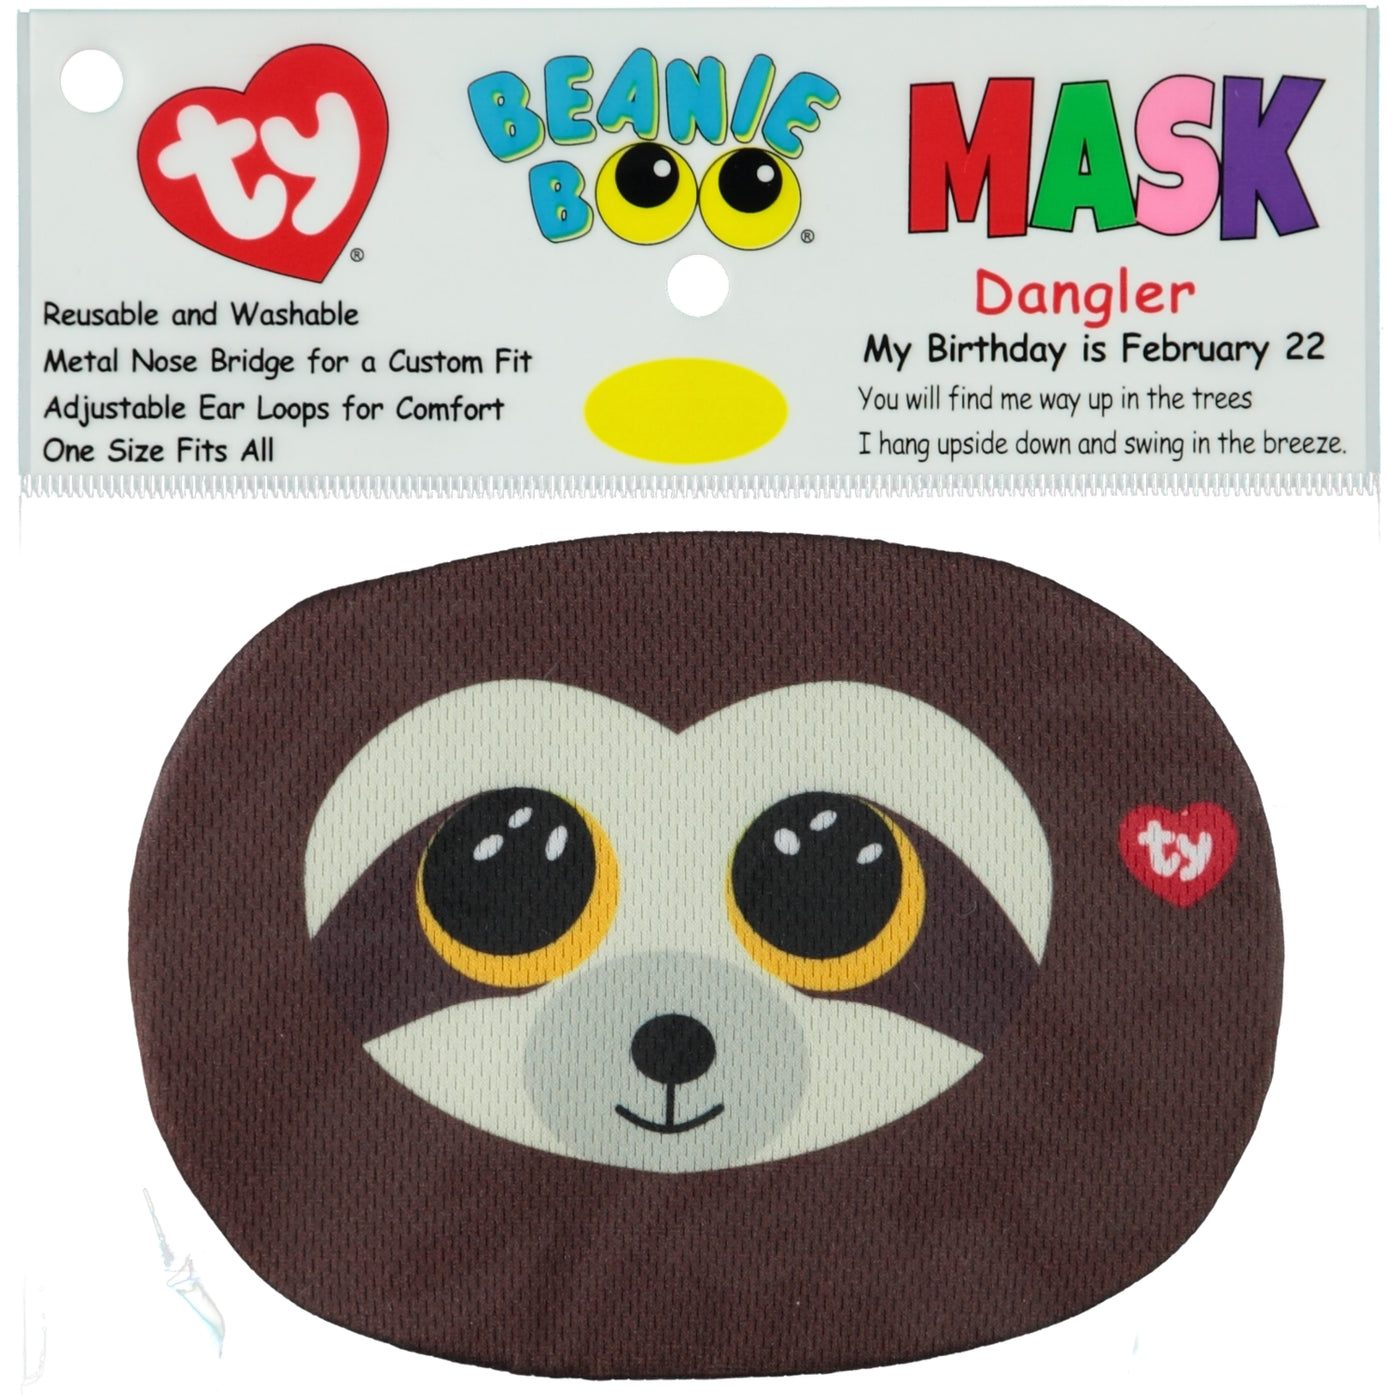 TY Beanie Boos Face Mask Dangler Sloth